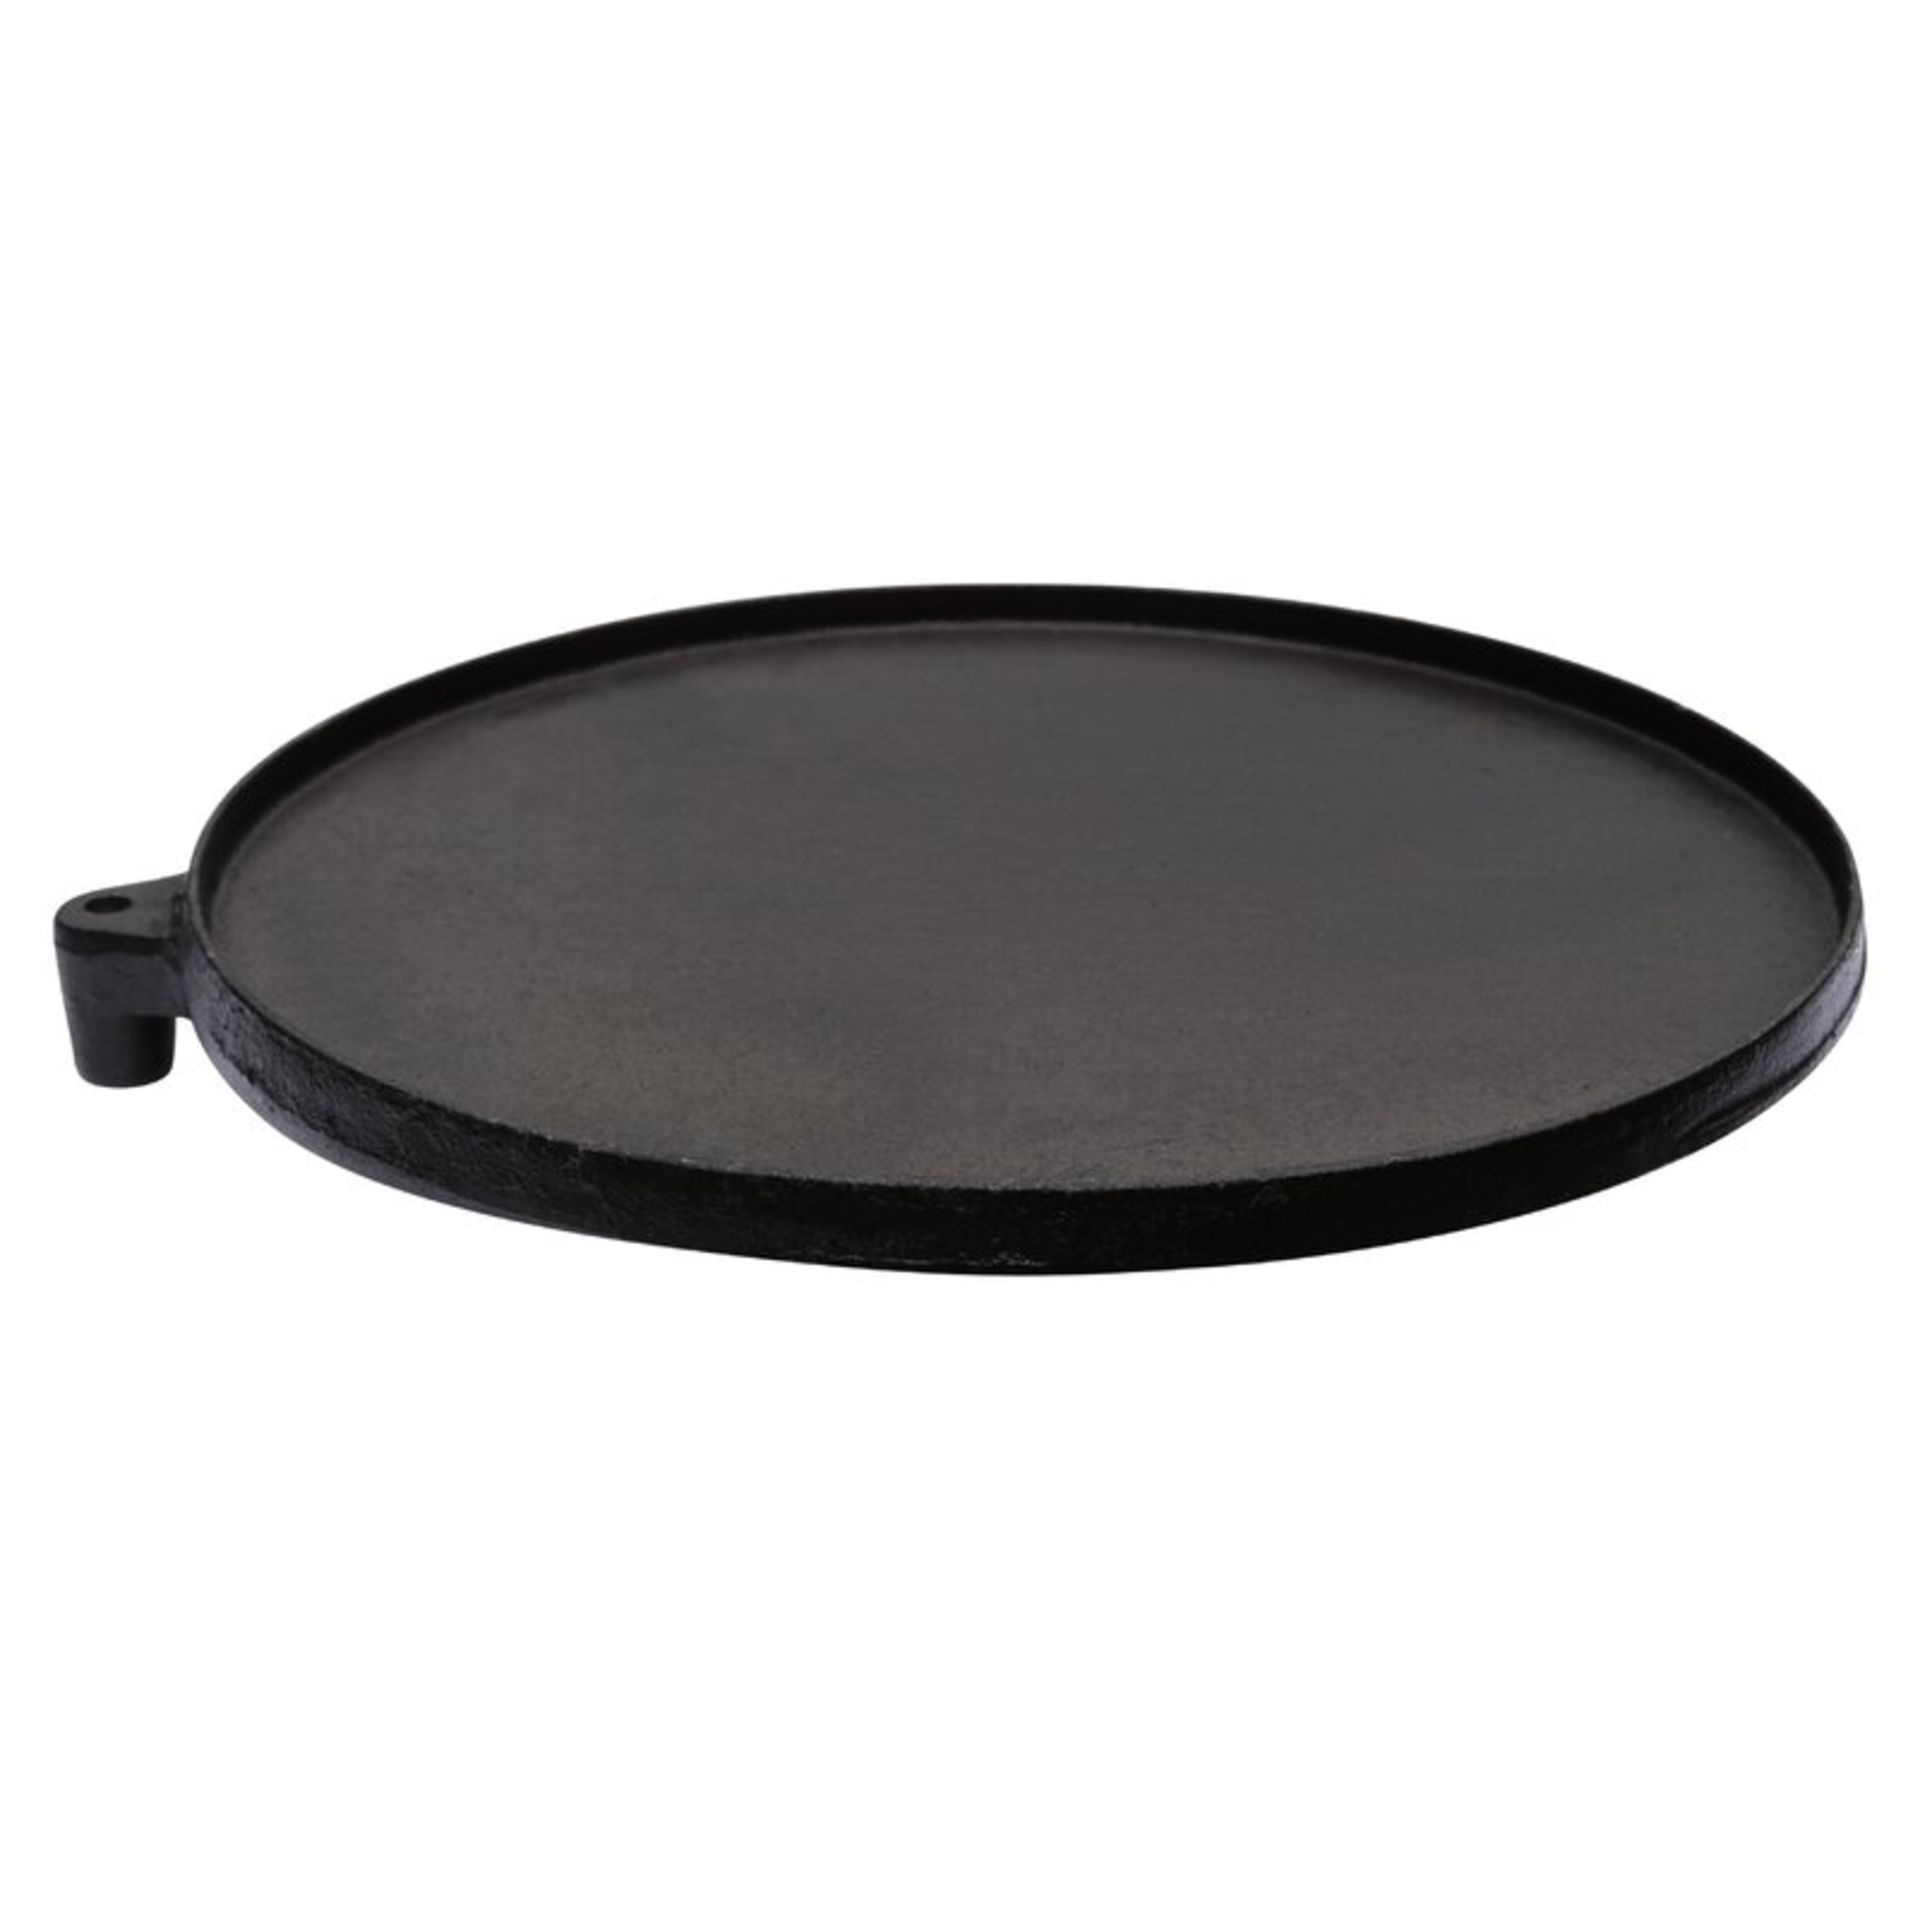 30cm Black Grill Pan - RRP £17.99 - Image 2 of 2